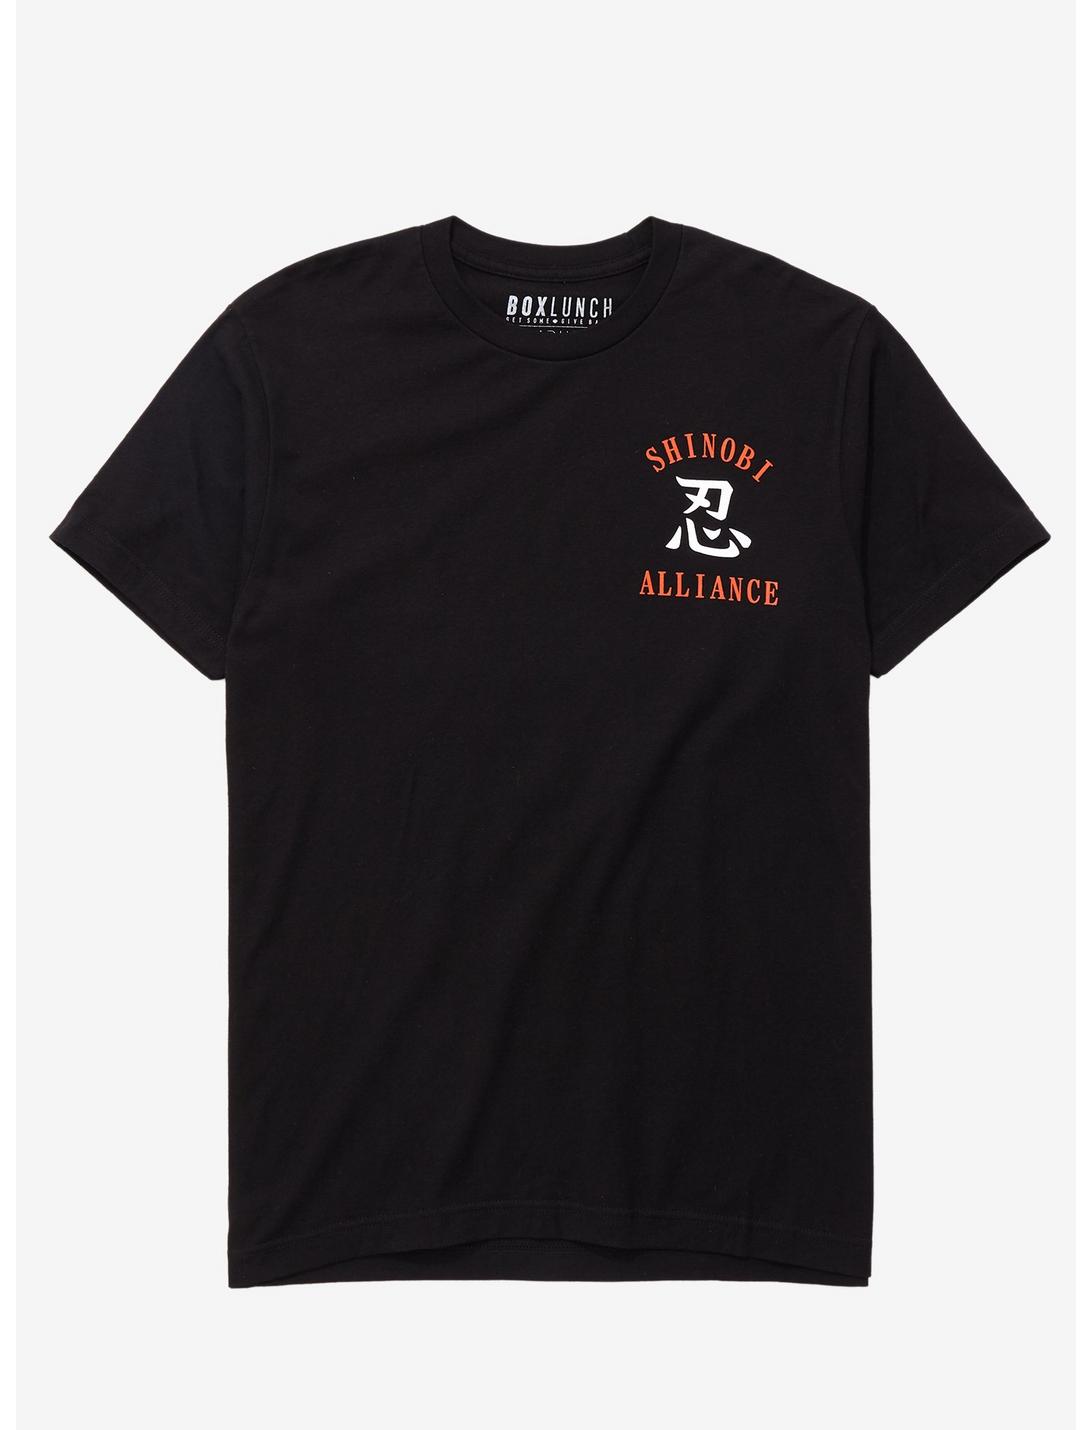 Naruto Shippuden Shinobi Alliance T-Shirt - BoxLunch Exclusive, BLACK, hi-res